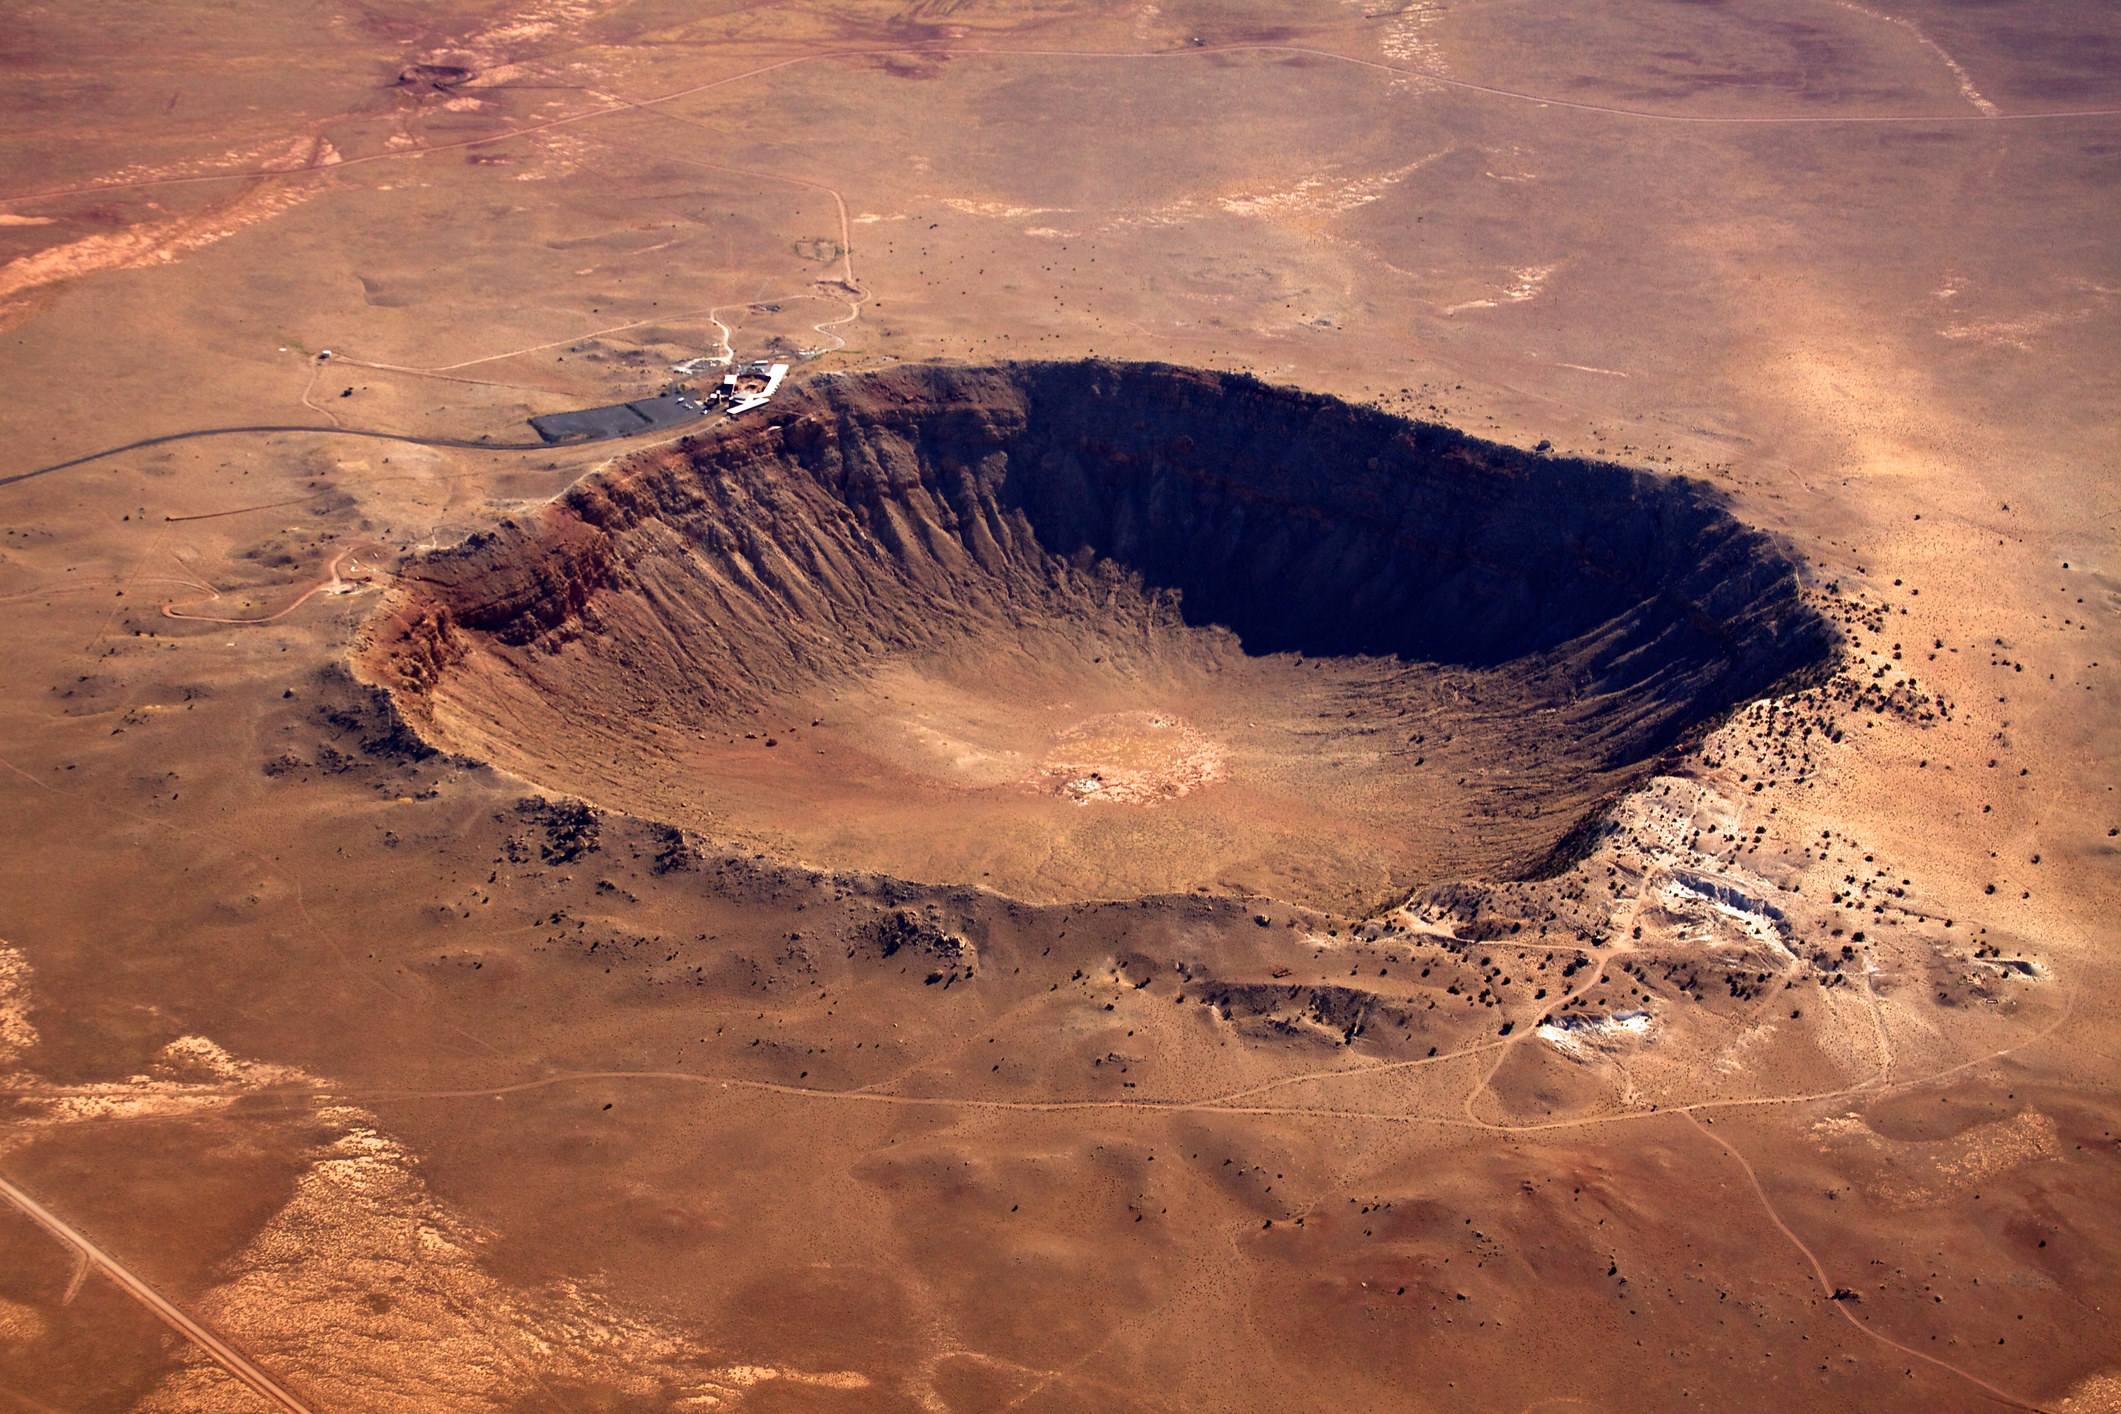 An enormous hole in a sandy, desertlike landscape